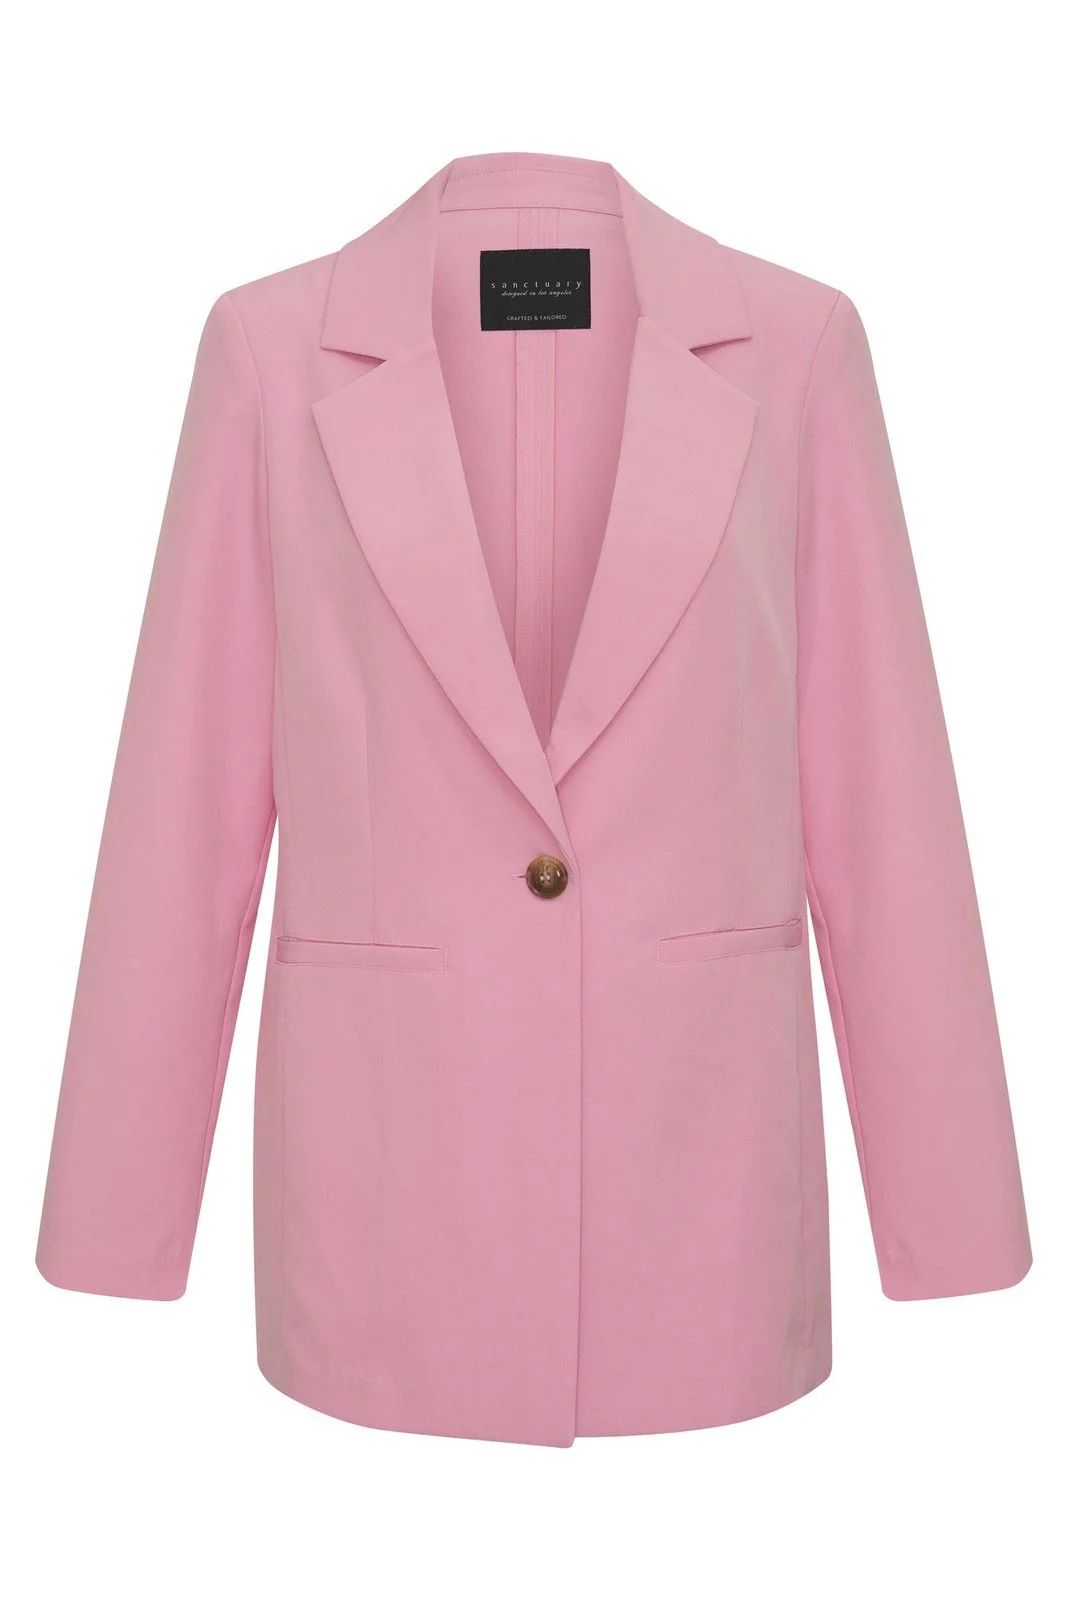 Bryce Woven Blazer Pink No.3 | Sanctuary Clothing